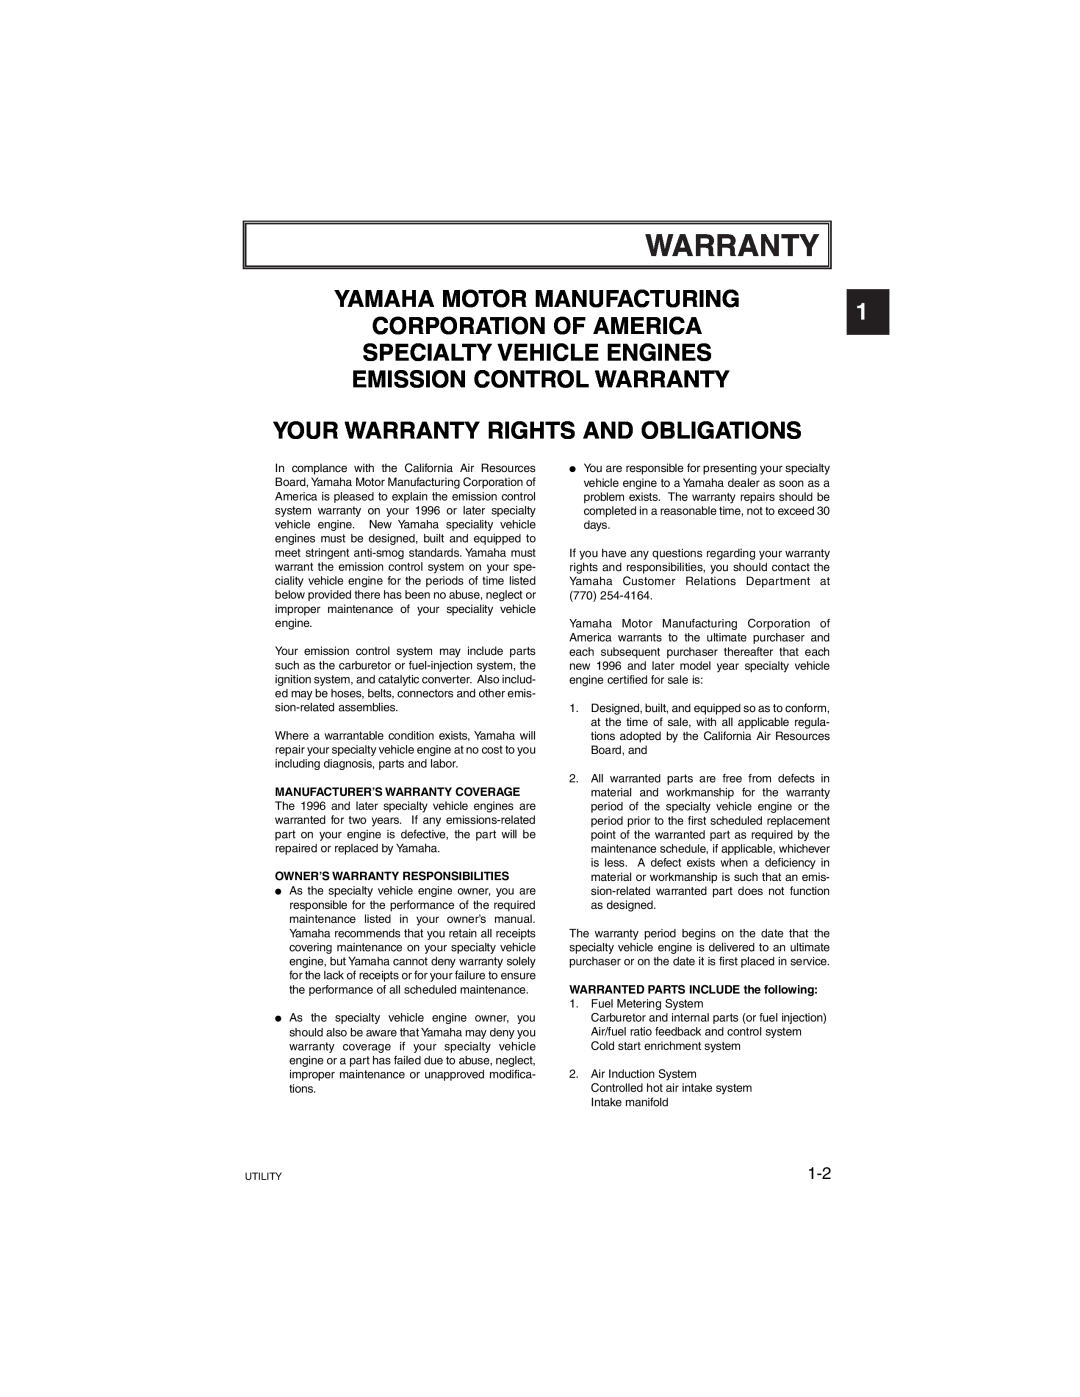 Yamaha G21A manual 4 5 6, Warranty, Yamaha Motor Manufacturing Corporation Of America, Specialty Vehicle Engines 